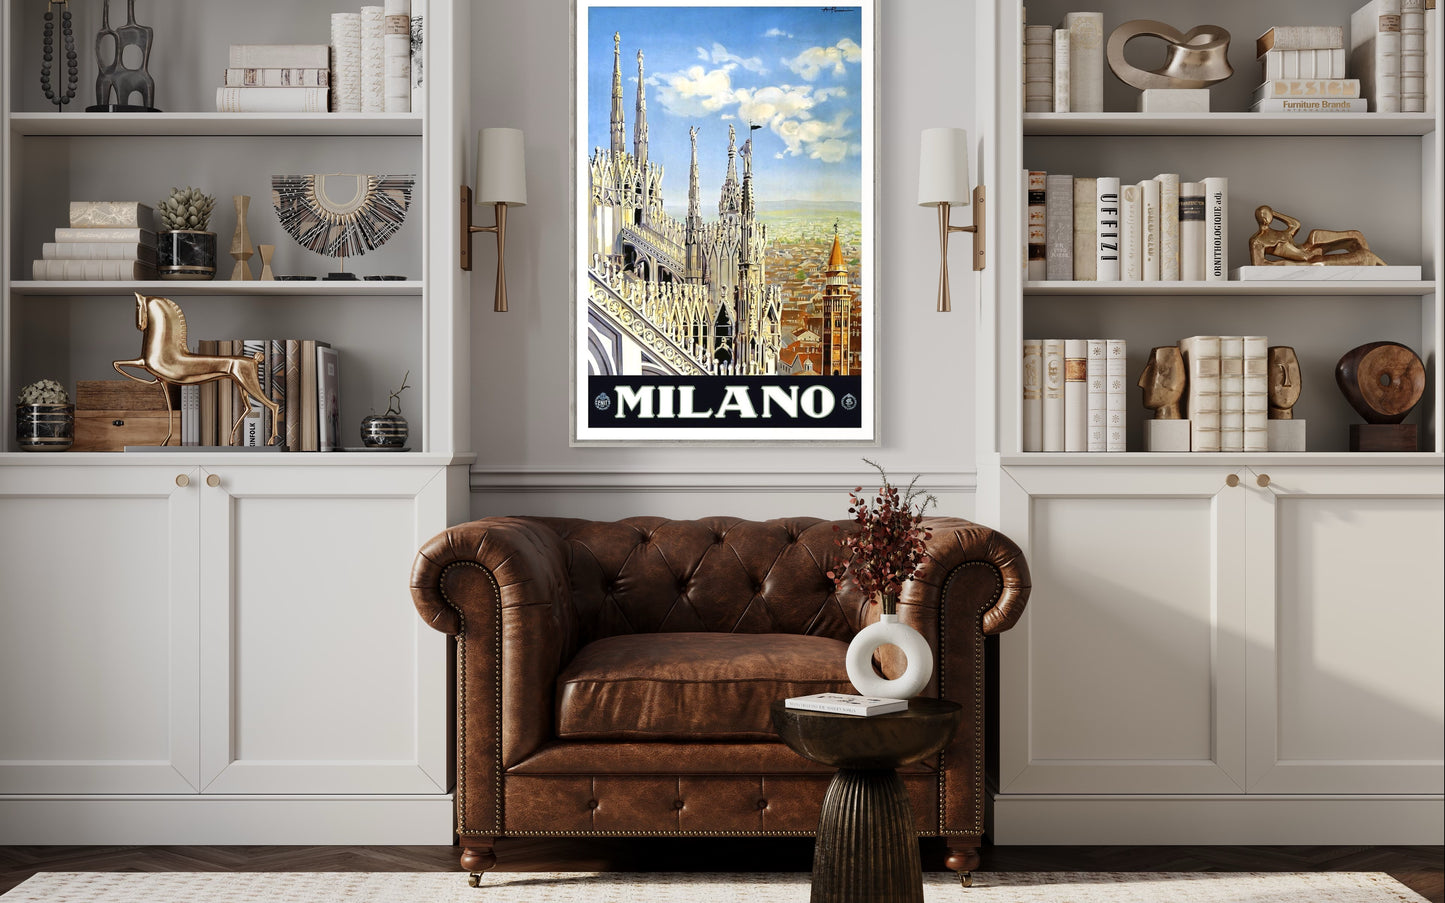 Milano Vintage Travel Poster